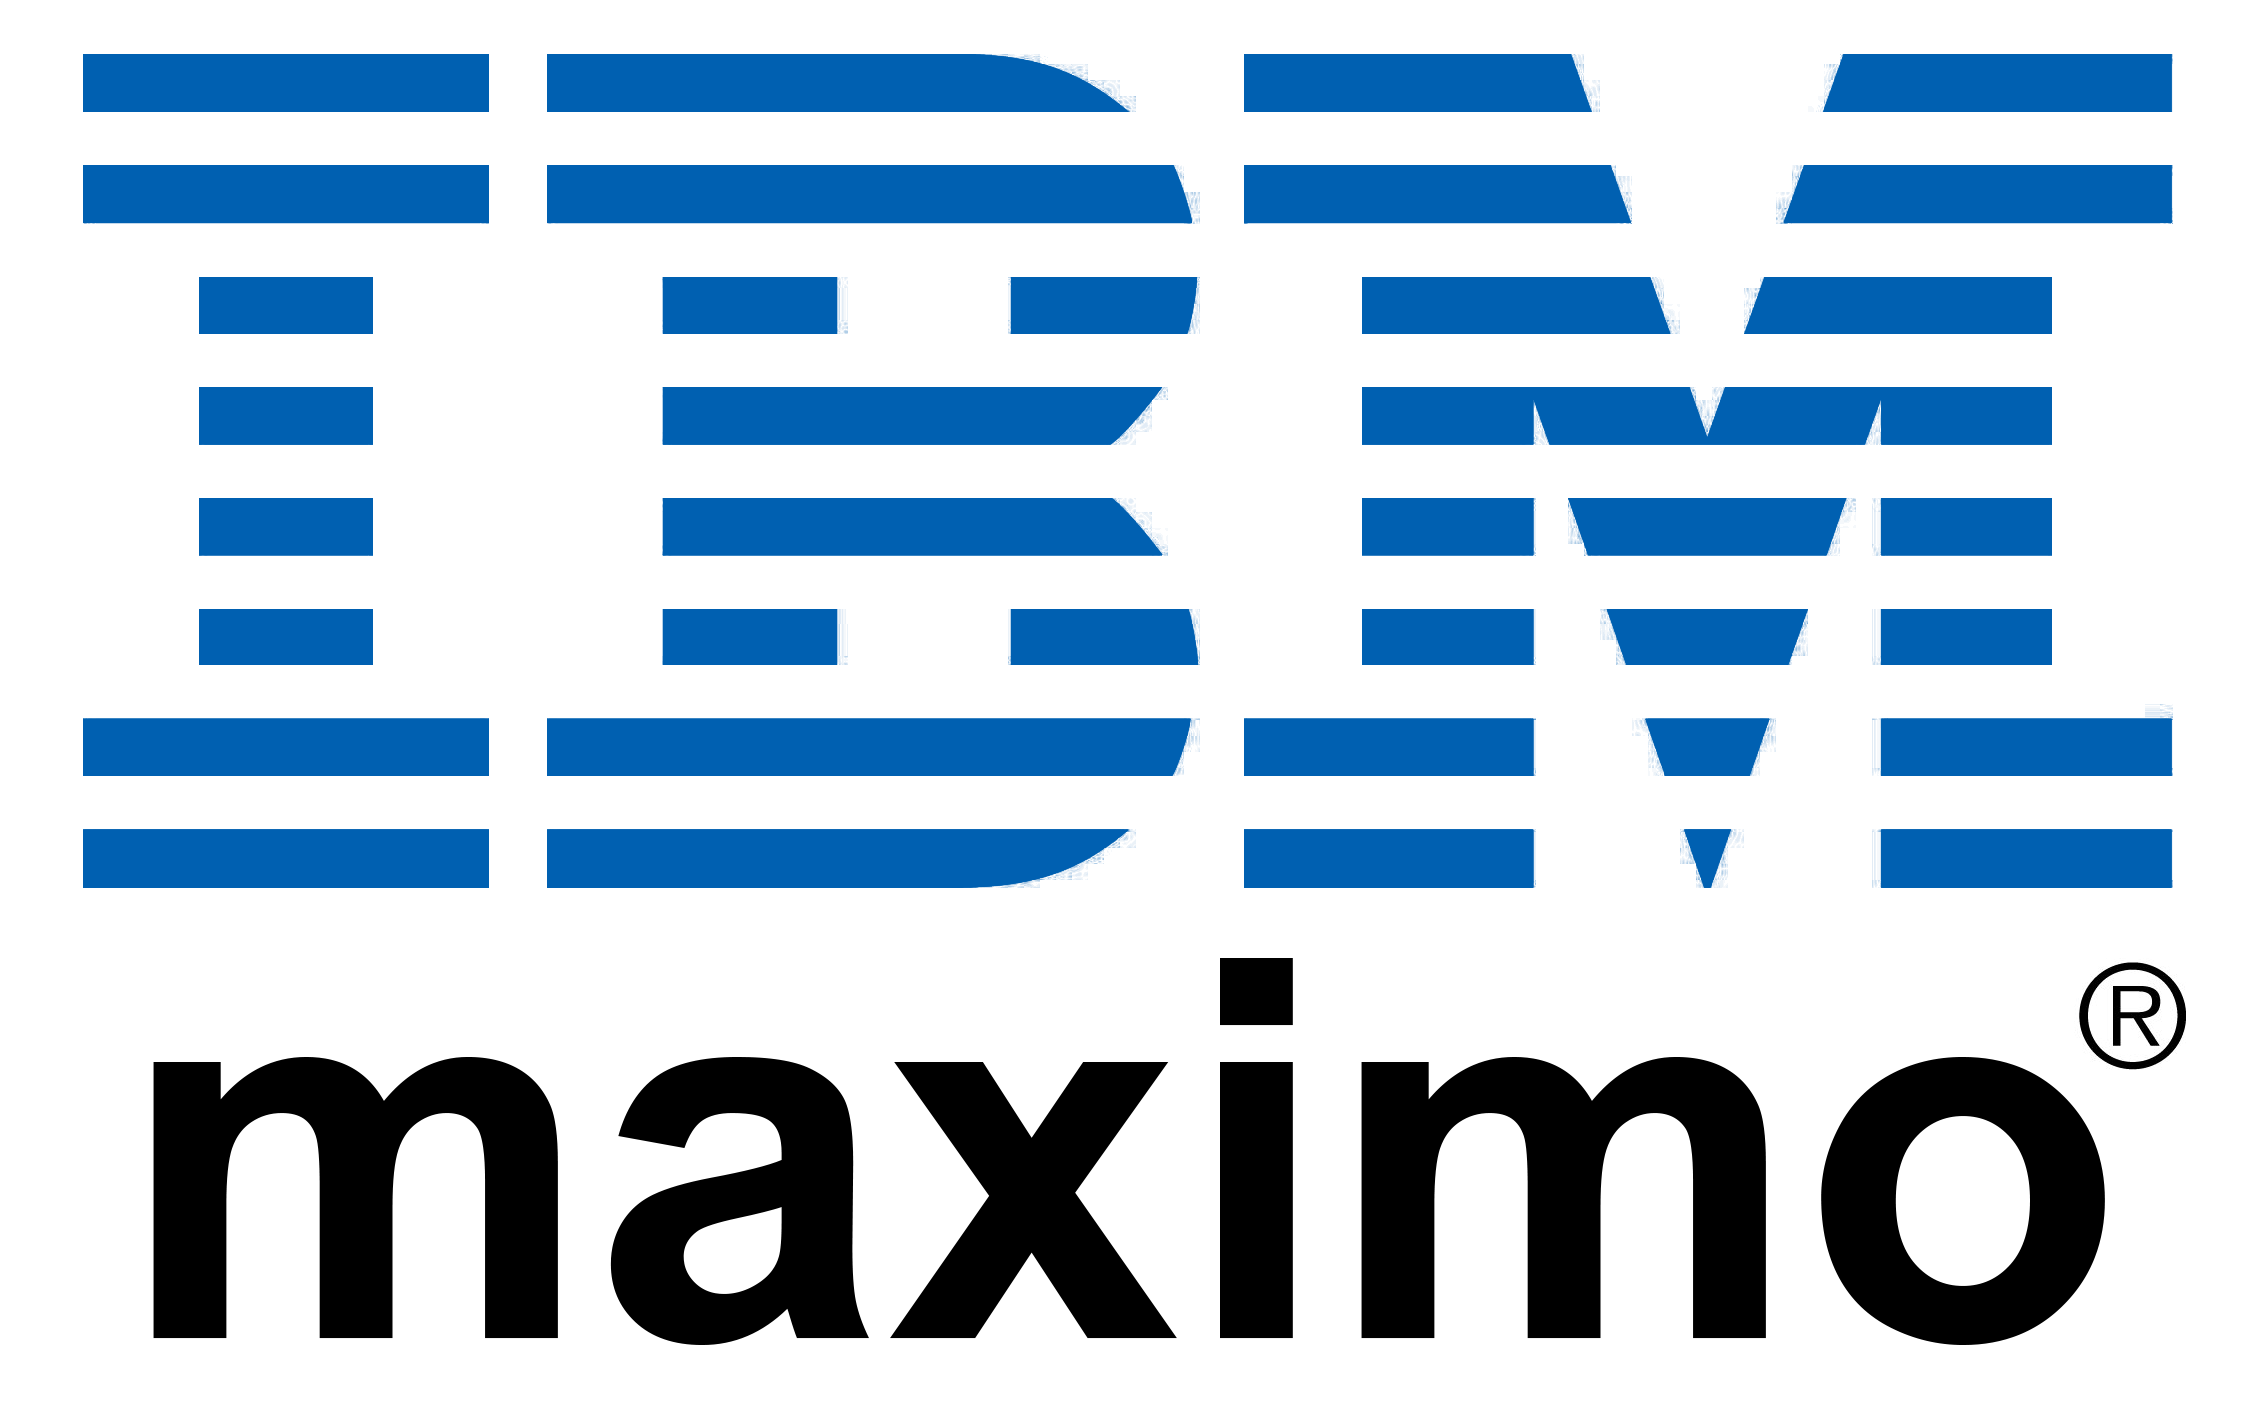 IBM Maximo 